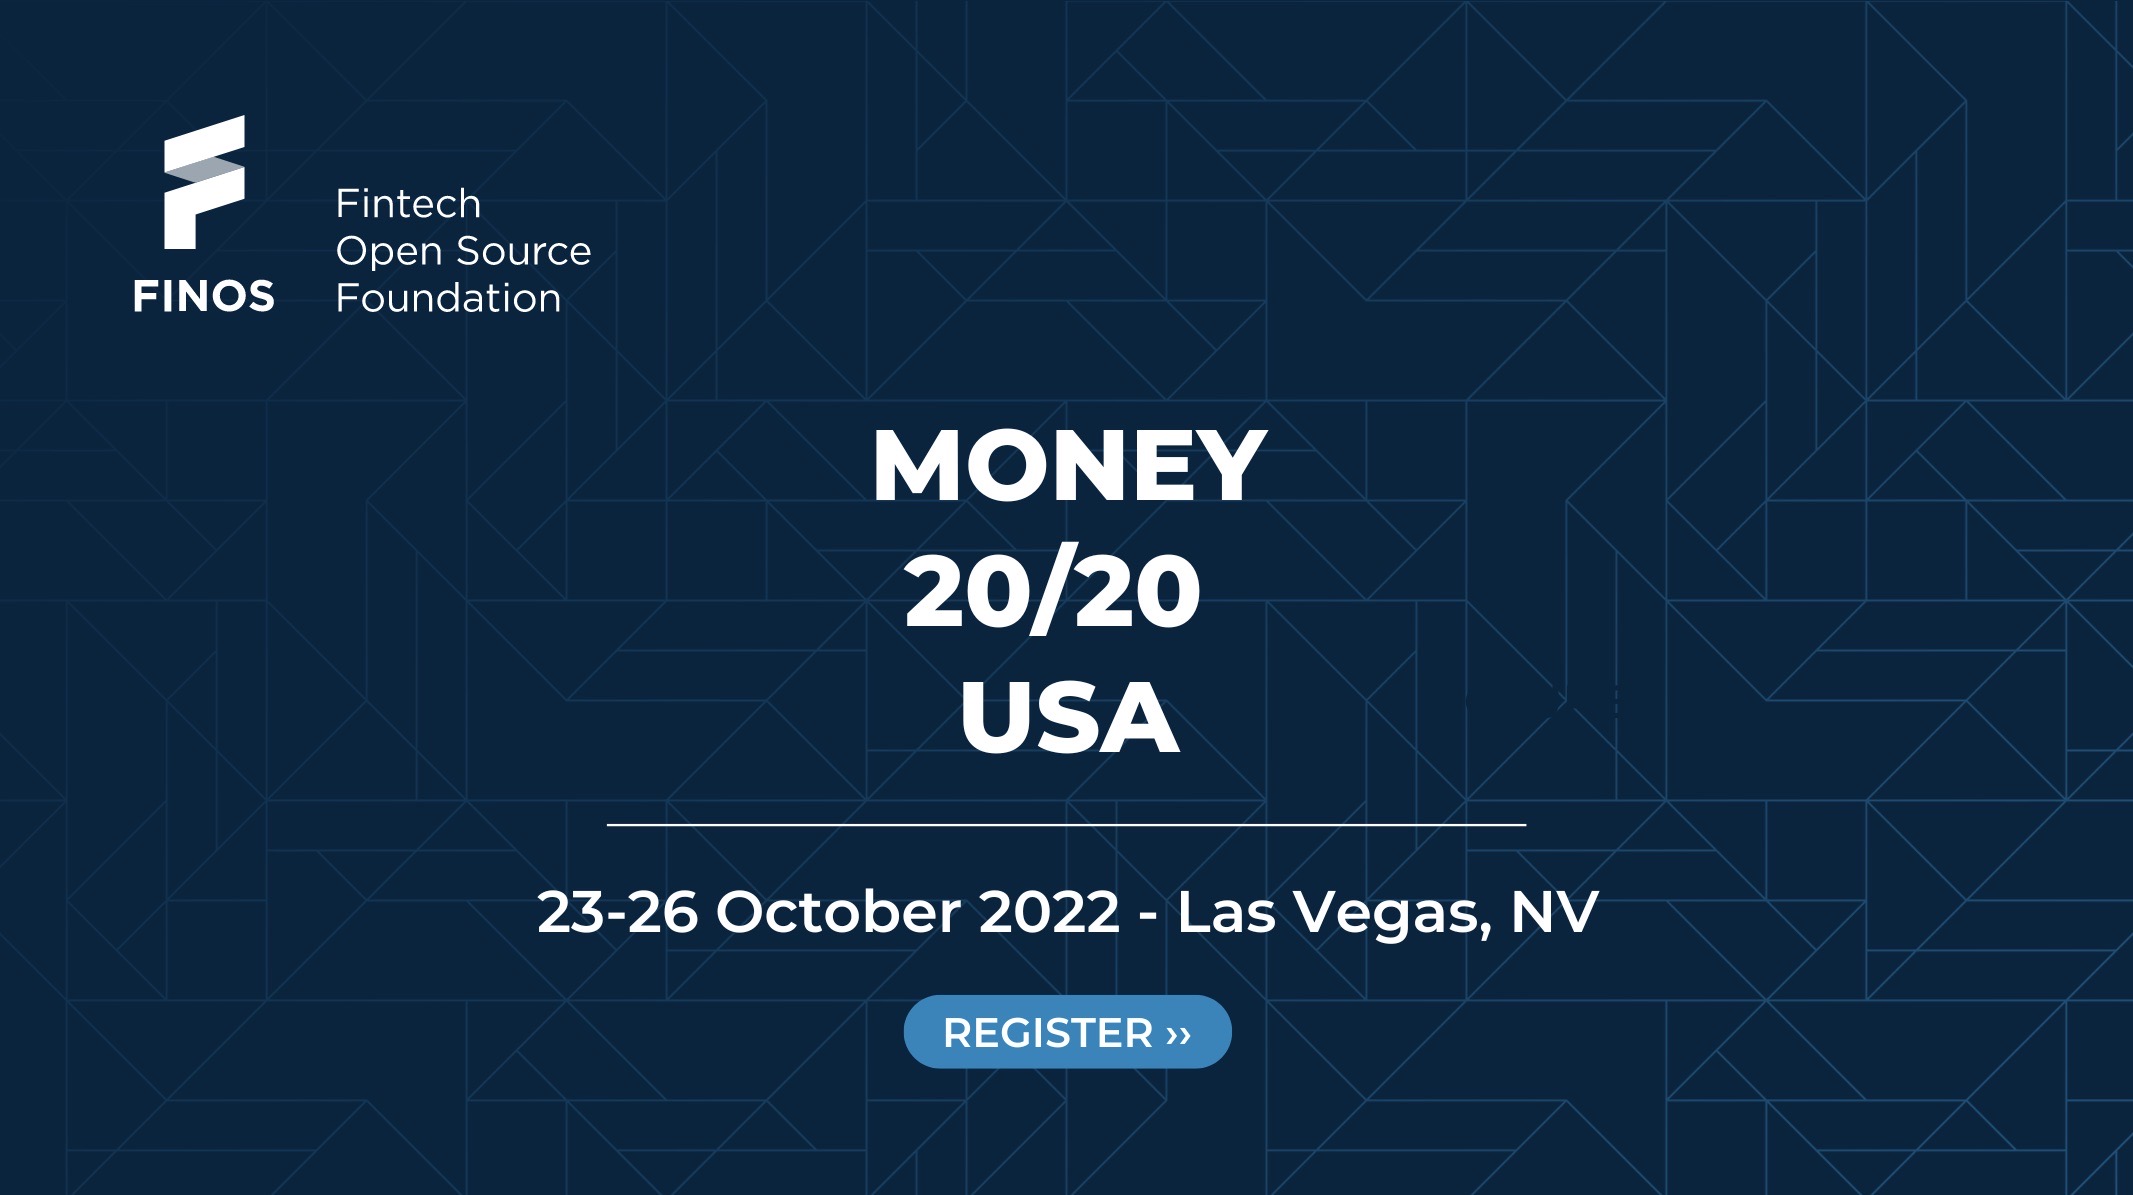 23-26 October: Money 20/20 USA